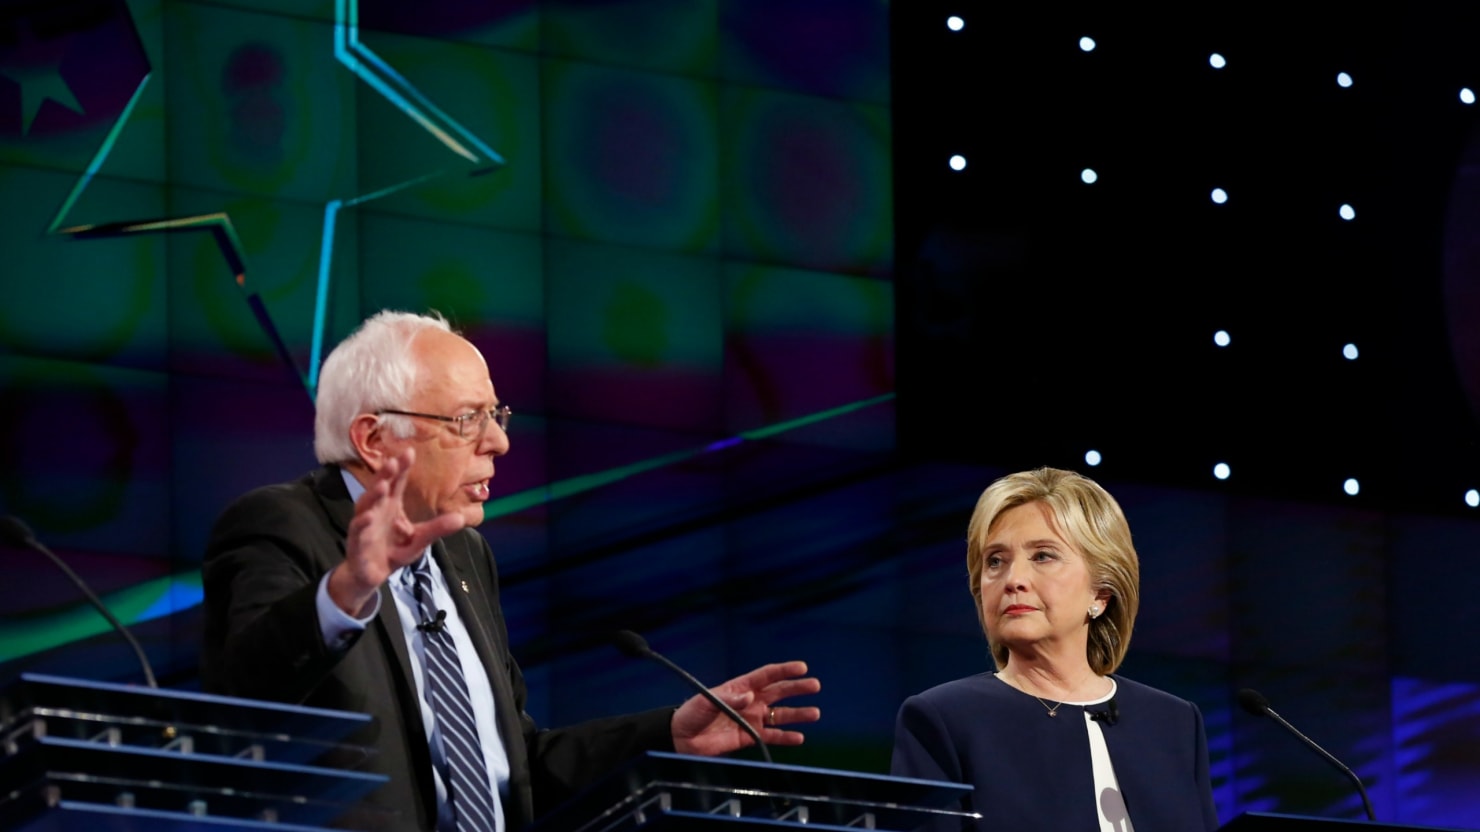 How to Watch the CBS Democratic Debate Live Stream Online